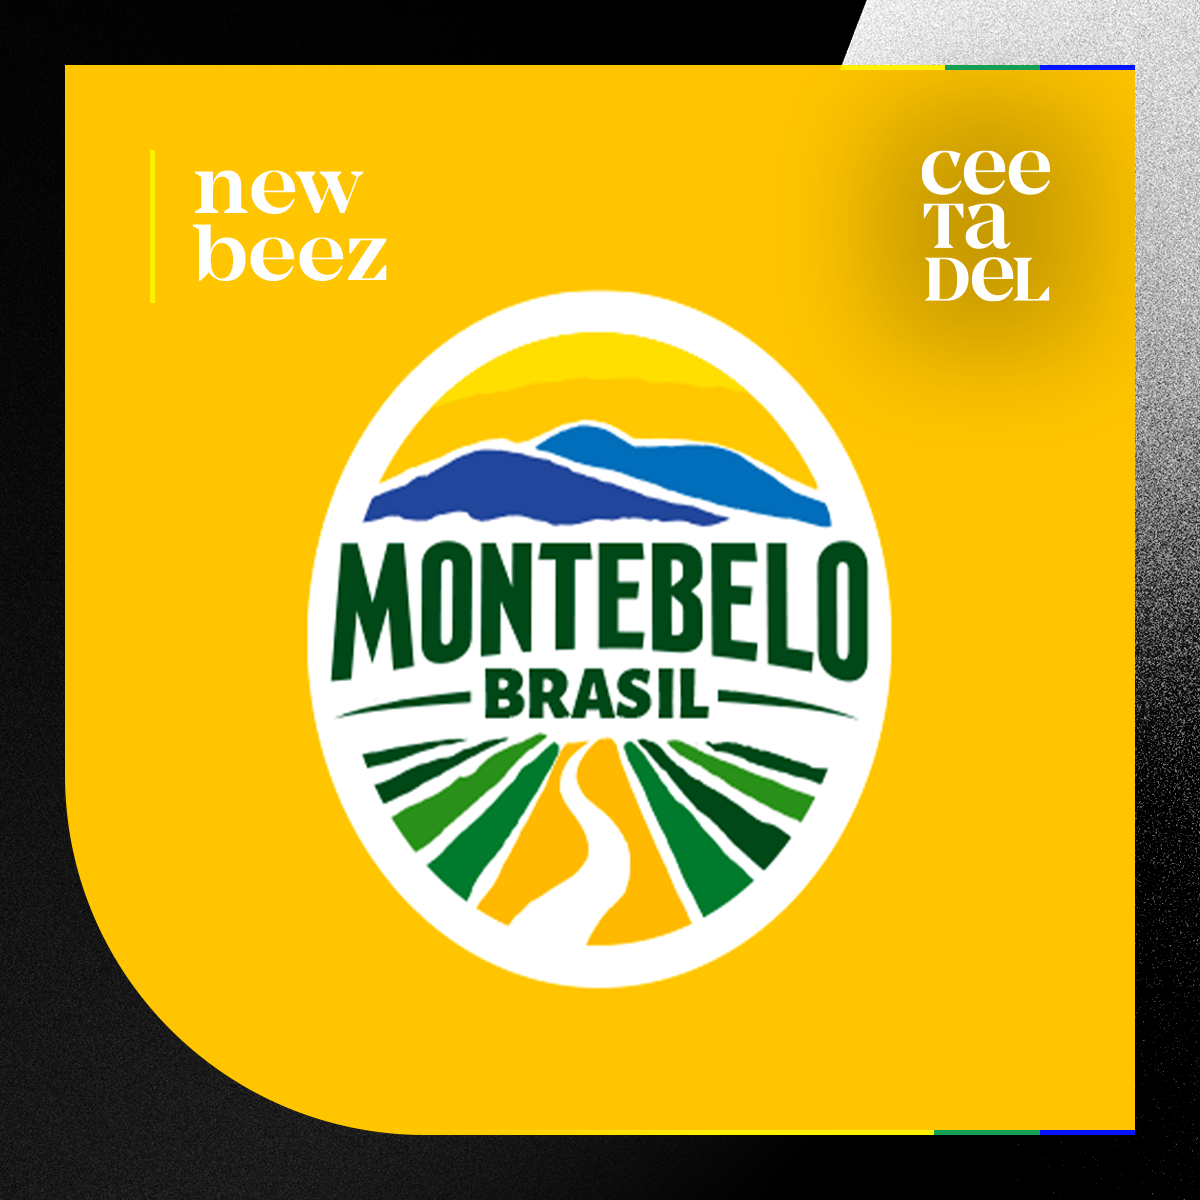 CEETADEL accompagne le lancement de la marque Montebelo Brasil